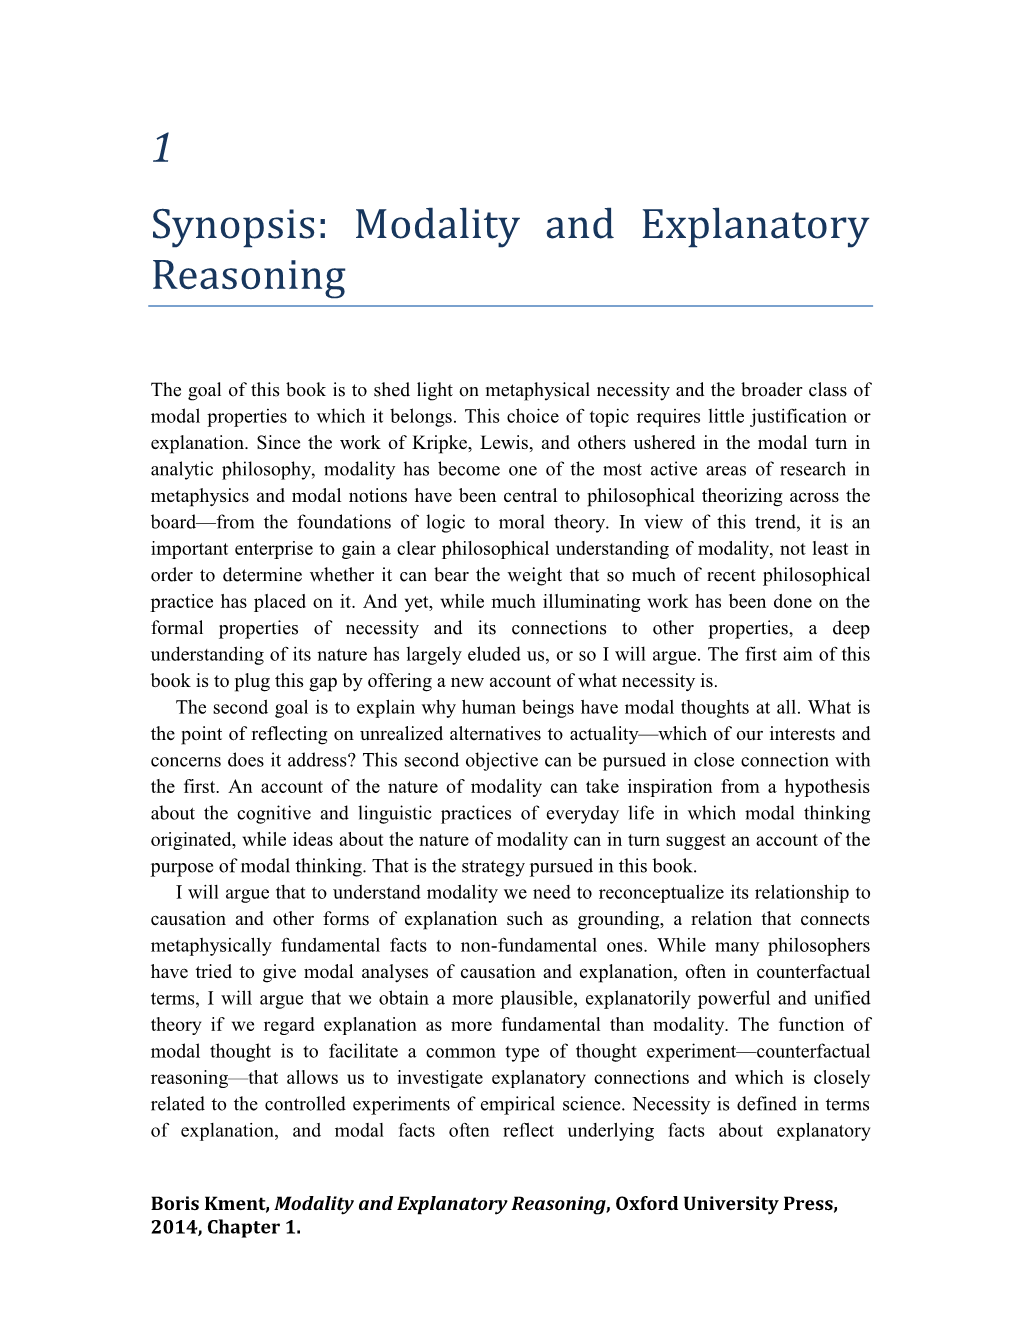 1 Synopsis: Modality and Explanatory Reasoning